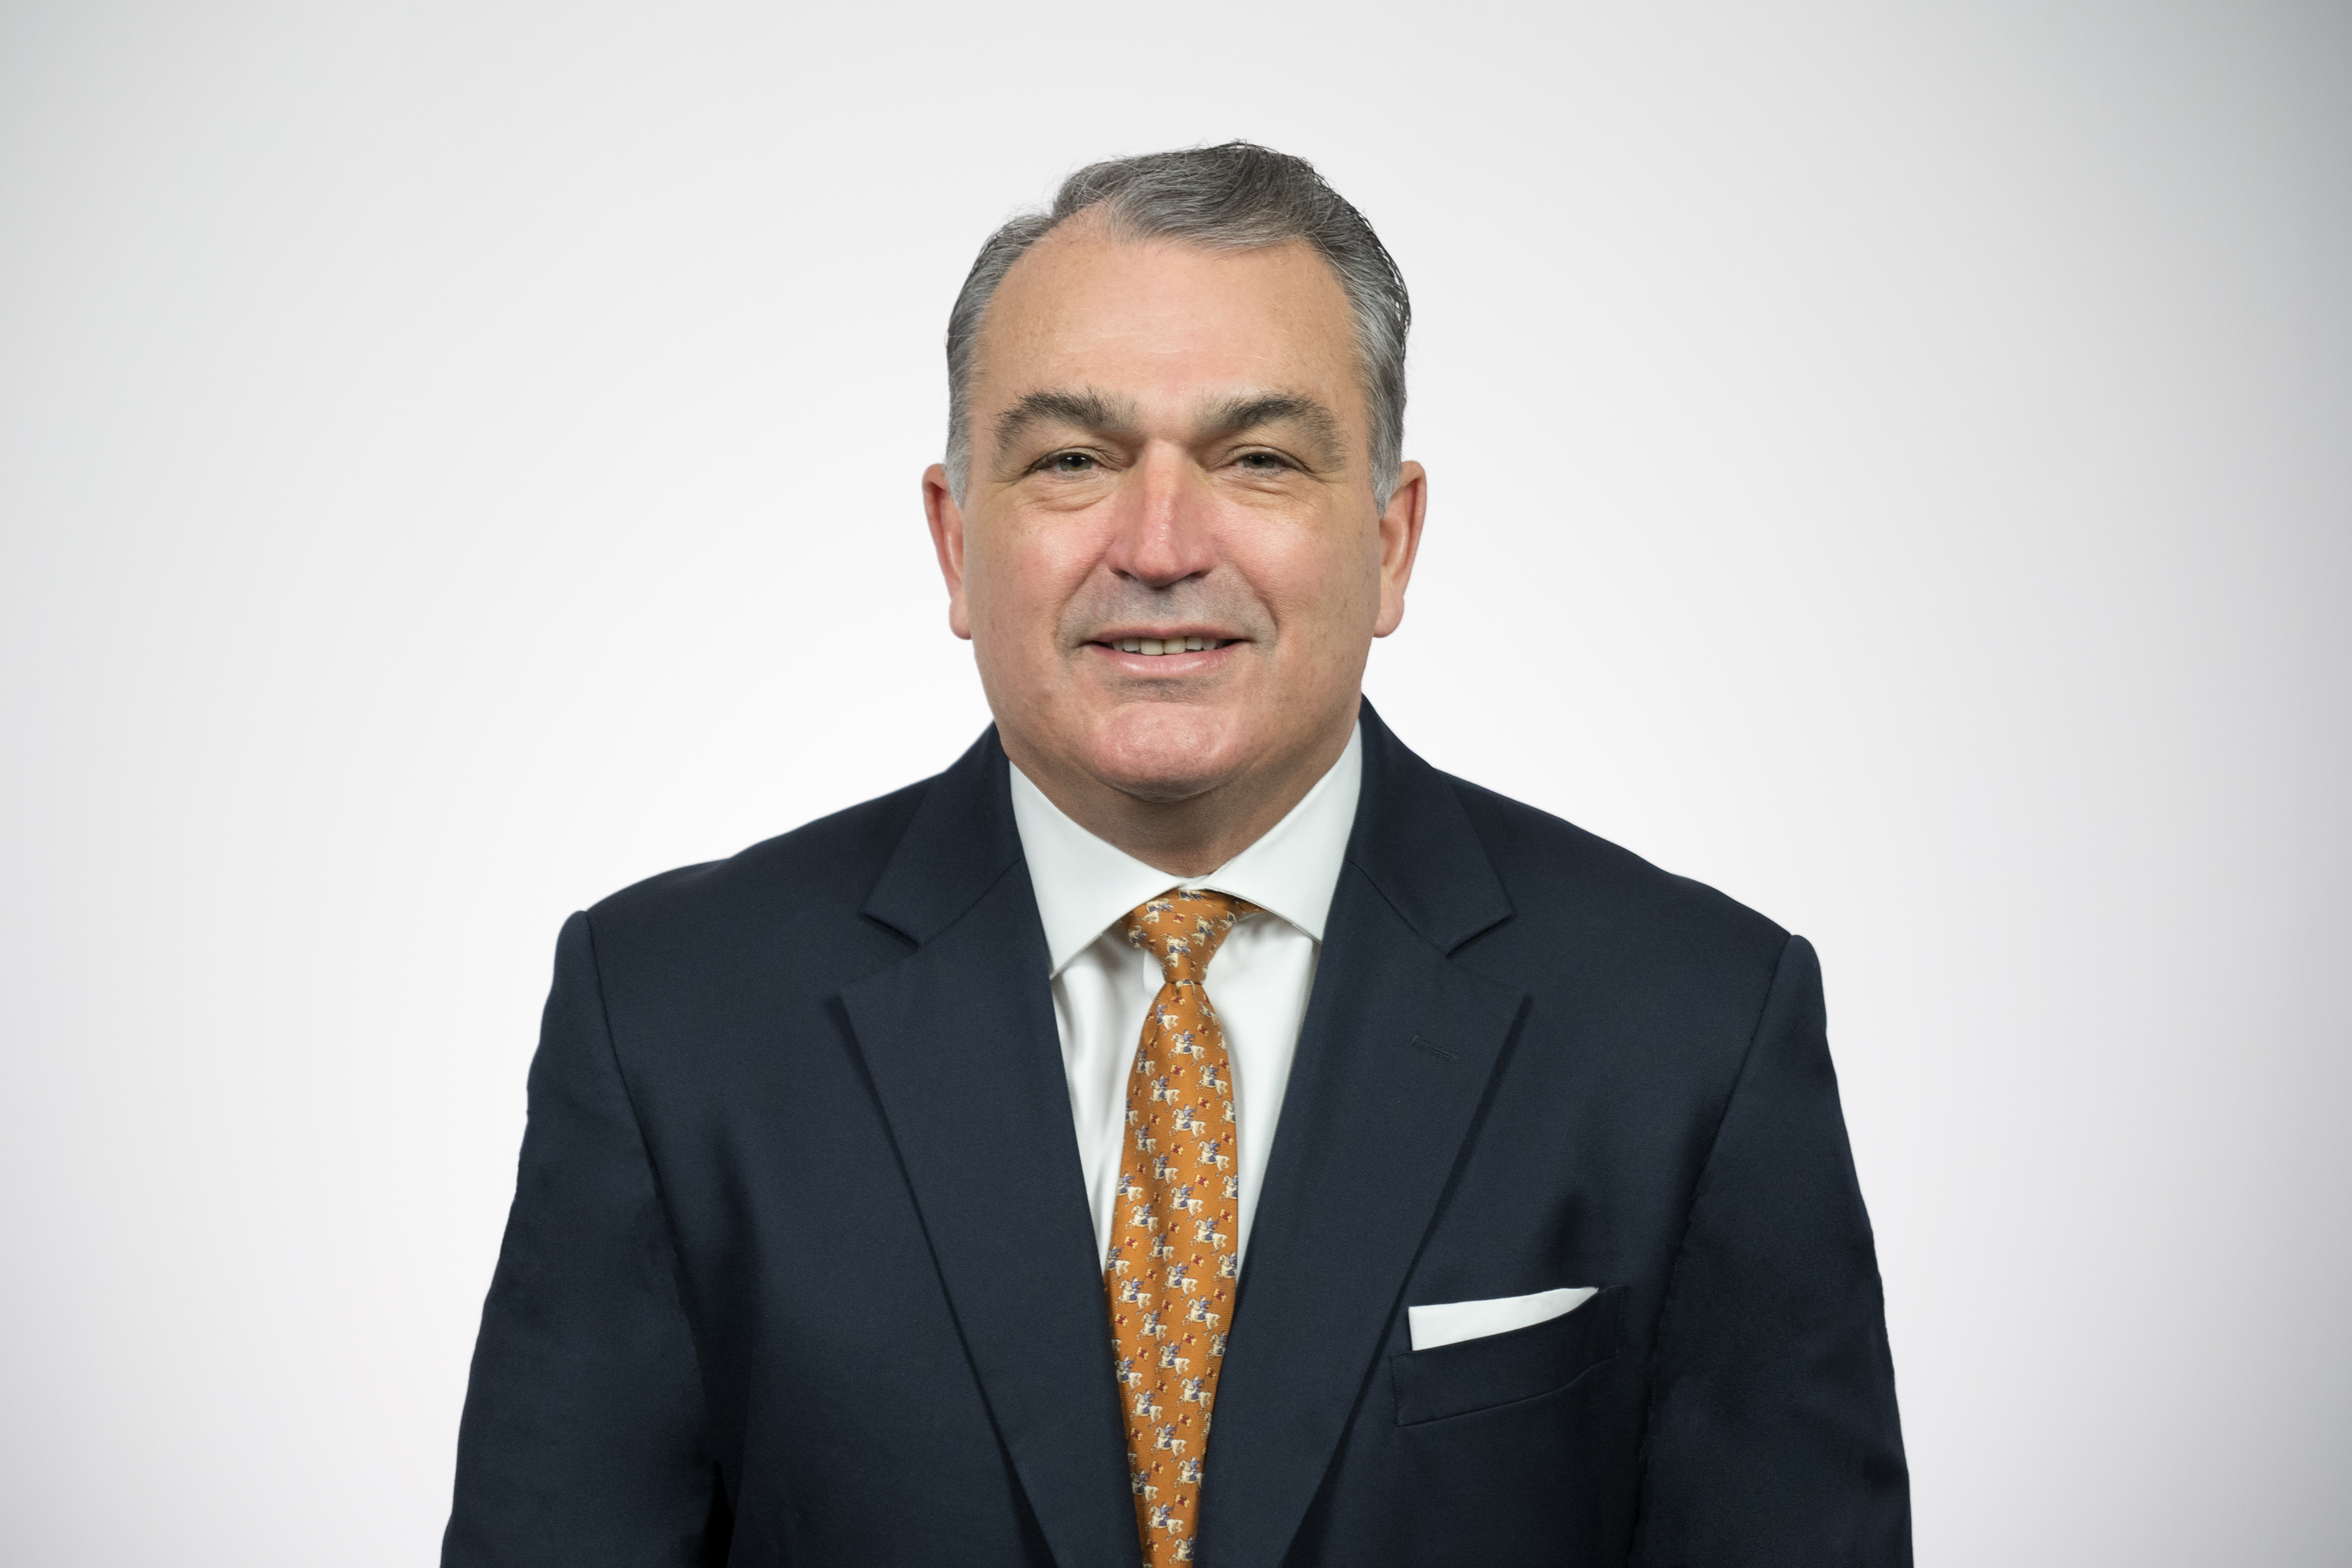 Ken Cadematori, Senior Vice President  & Chief Financial Officer at GuideOne Insurance